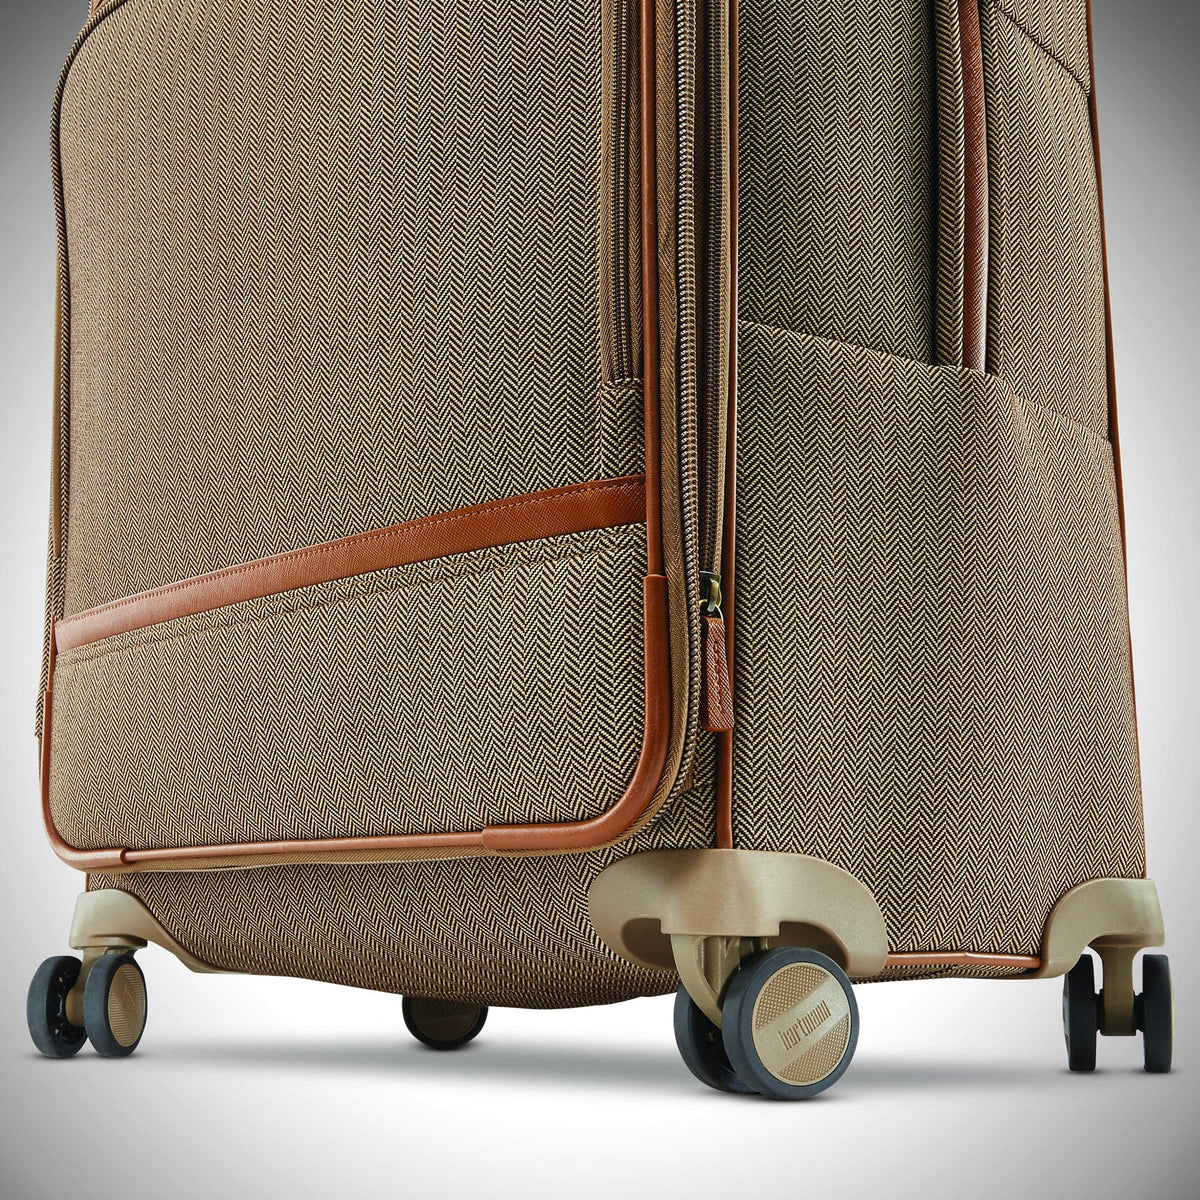 Hartmann Herringbone Deluxe Extended Journey Expandable Spinner Luggage